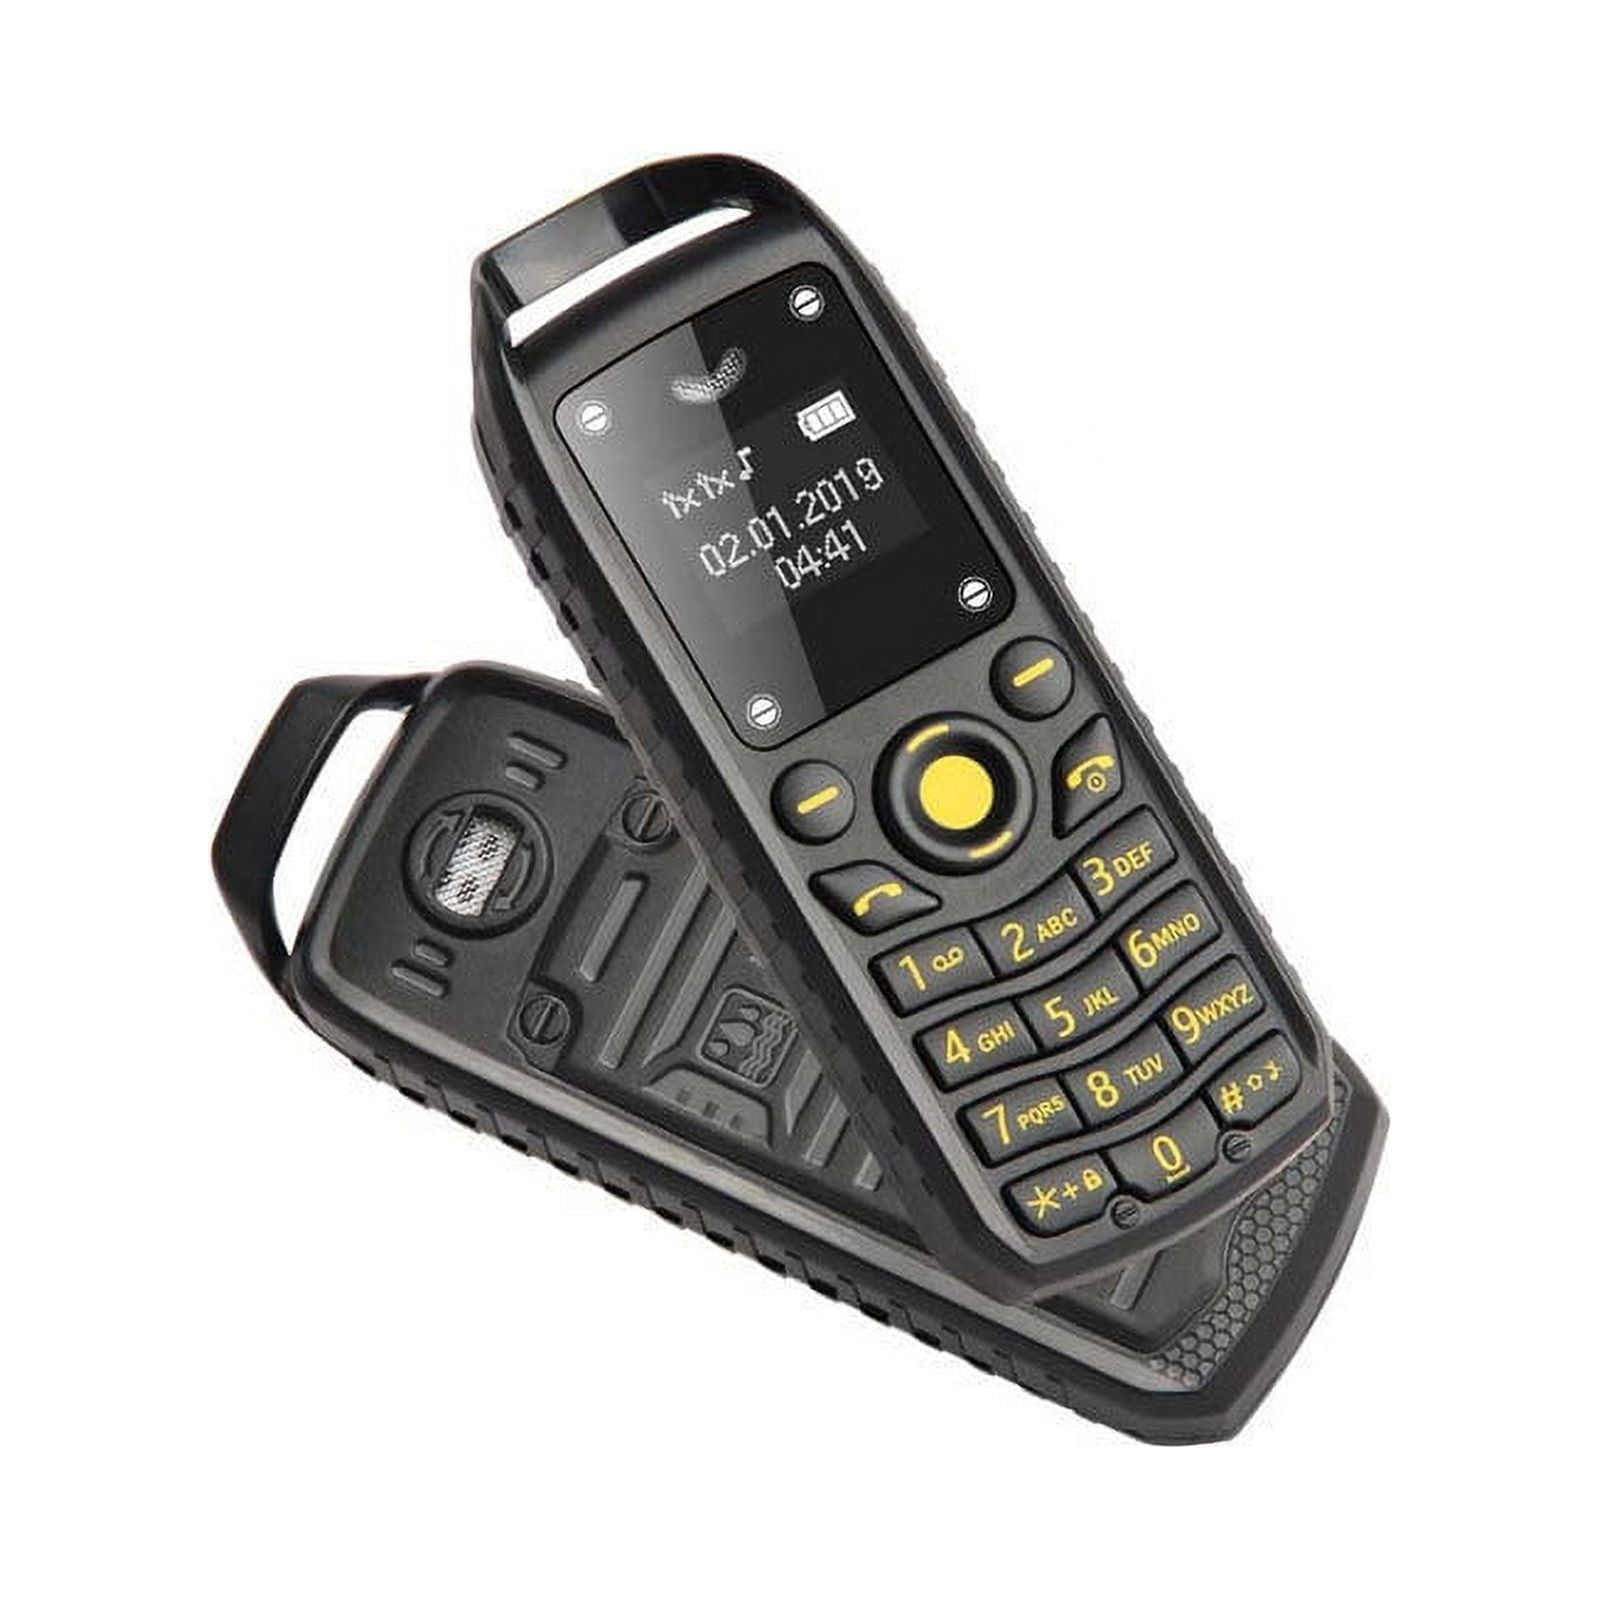 Cheap BM200 Mini Phone 0.66-Inch Screen MT6261D Gsm Quad Band Pocket Mobile  Phone With Keypad Dual Sim For Elderly